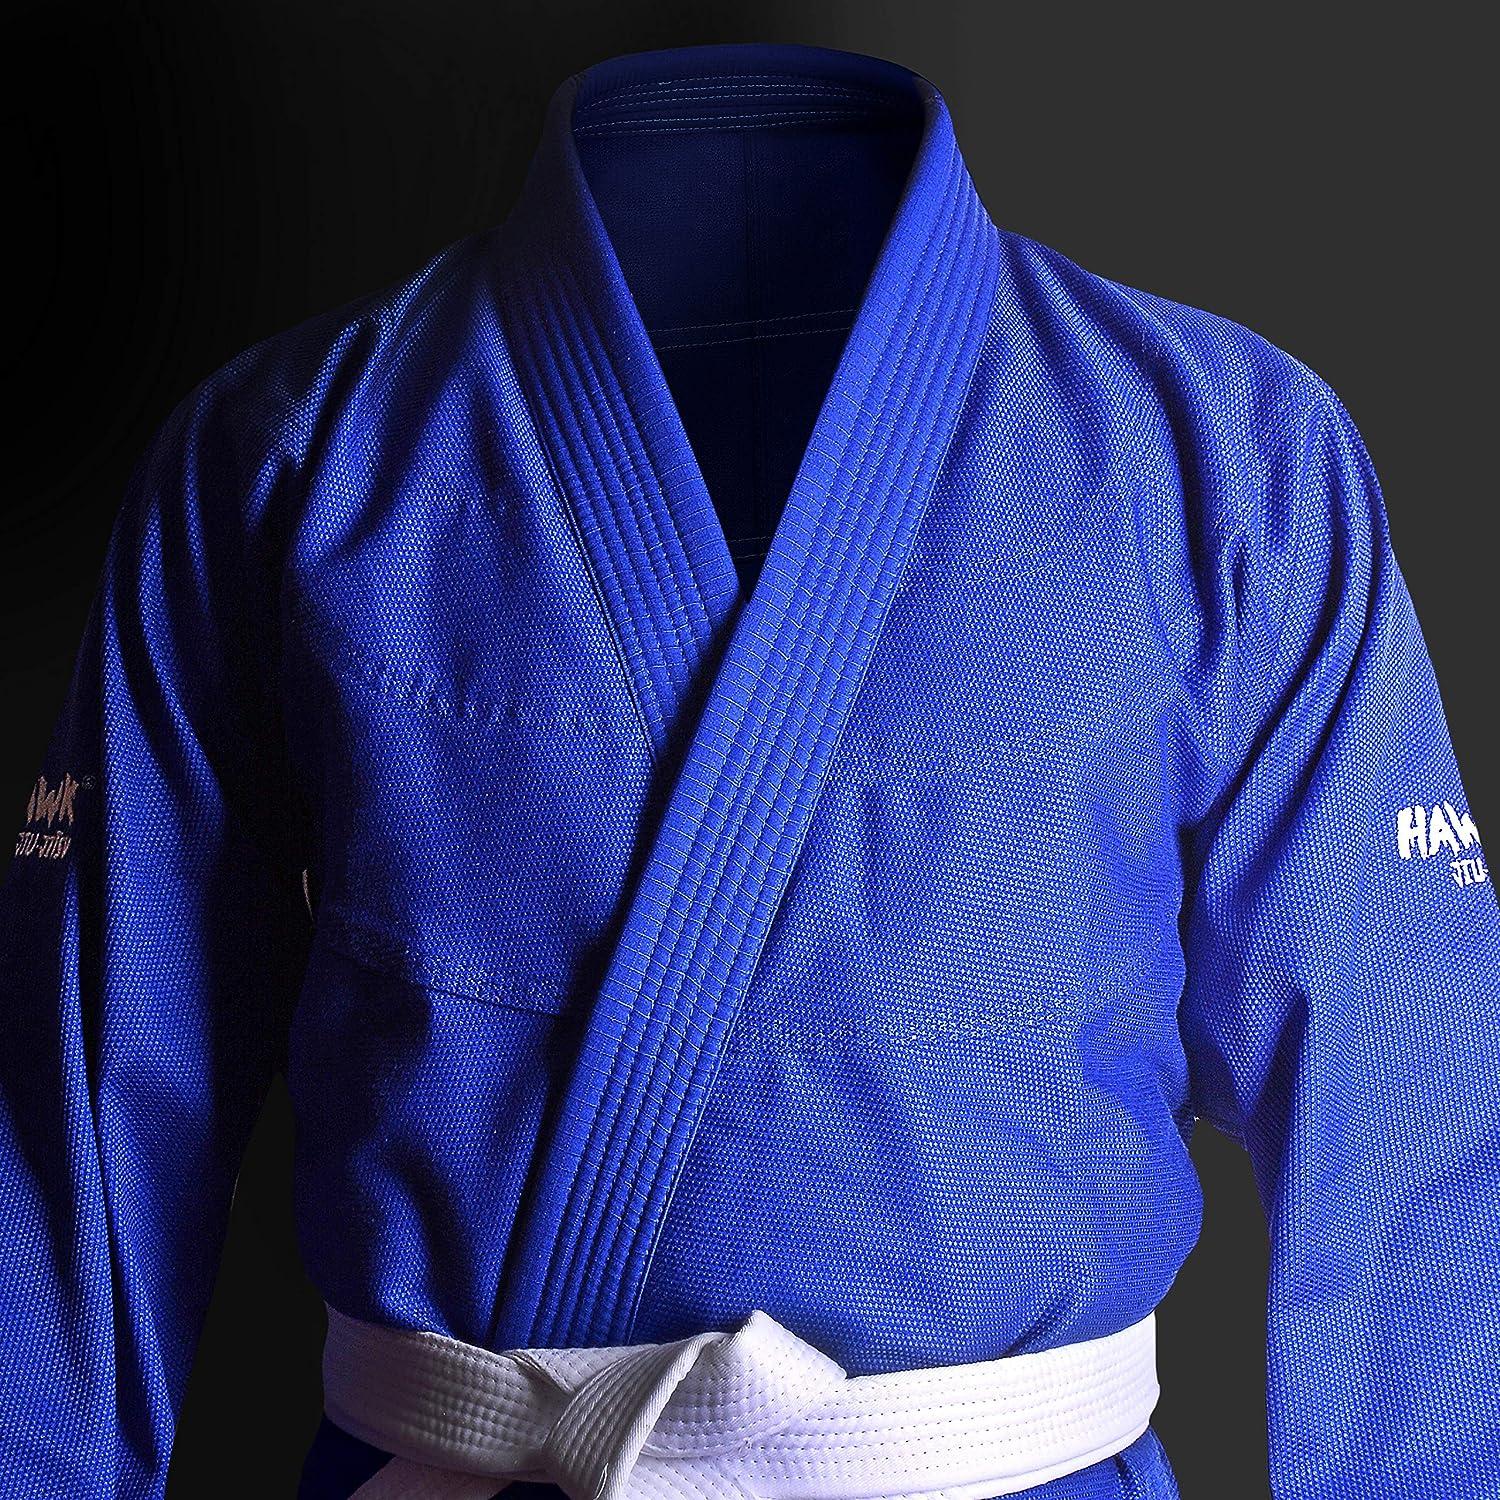 Hawk Sports Brazilian Jiu Jitsu Gi for Men and Women with Jacket, Pants,  and White Belt for Martial Arts Training A3 Blue